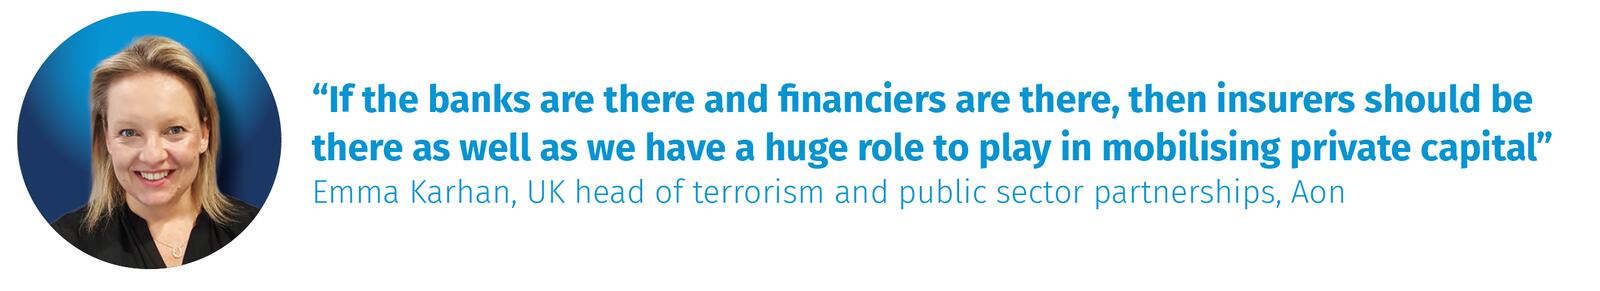 Emma Karhan, UK head of terrorism and public sector partnerships, Aon